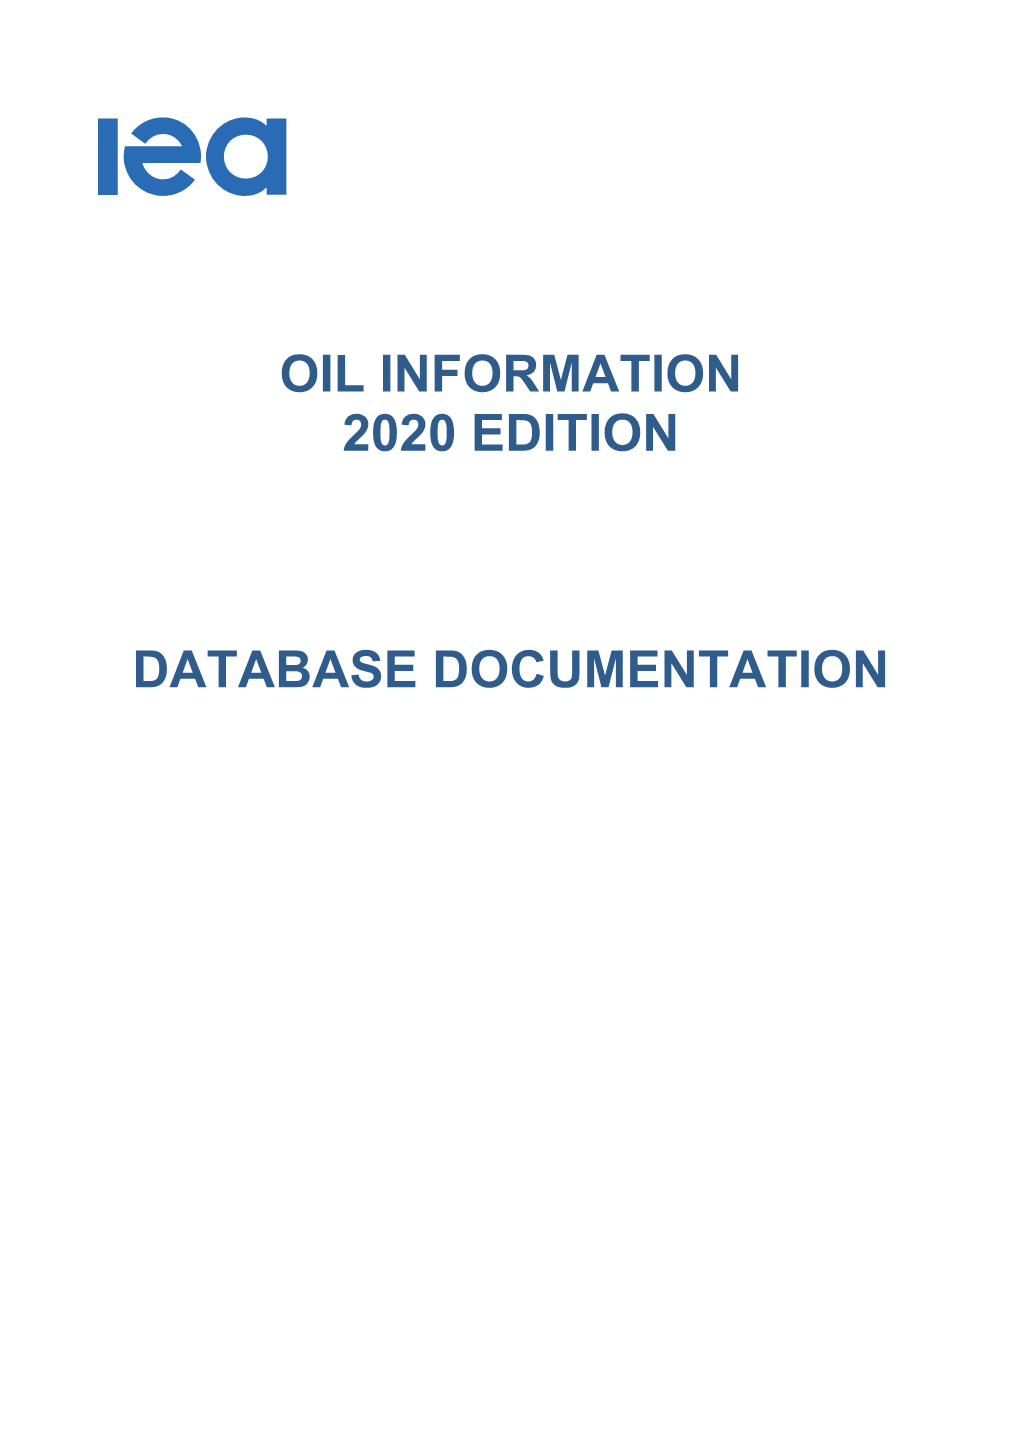 Oil Information 2020 Edition Database Documentation